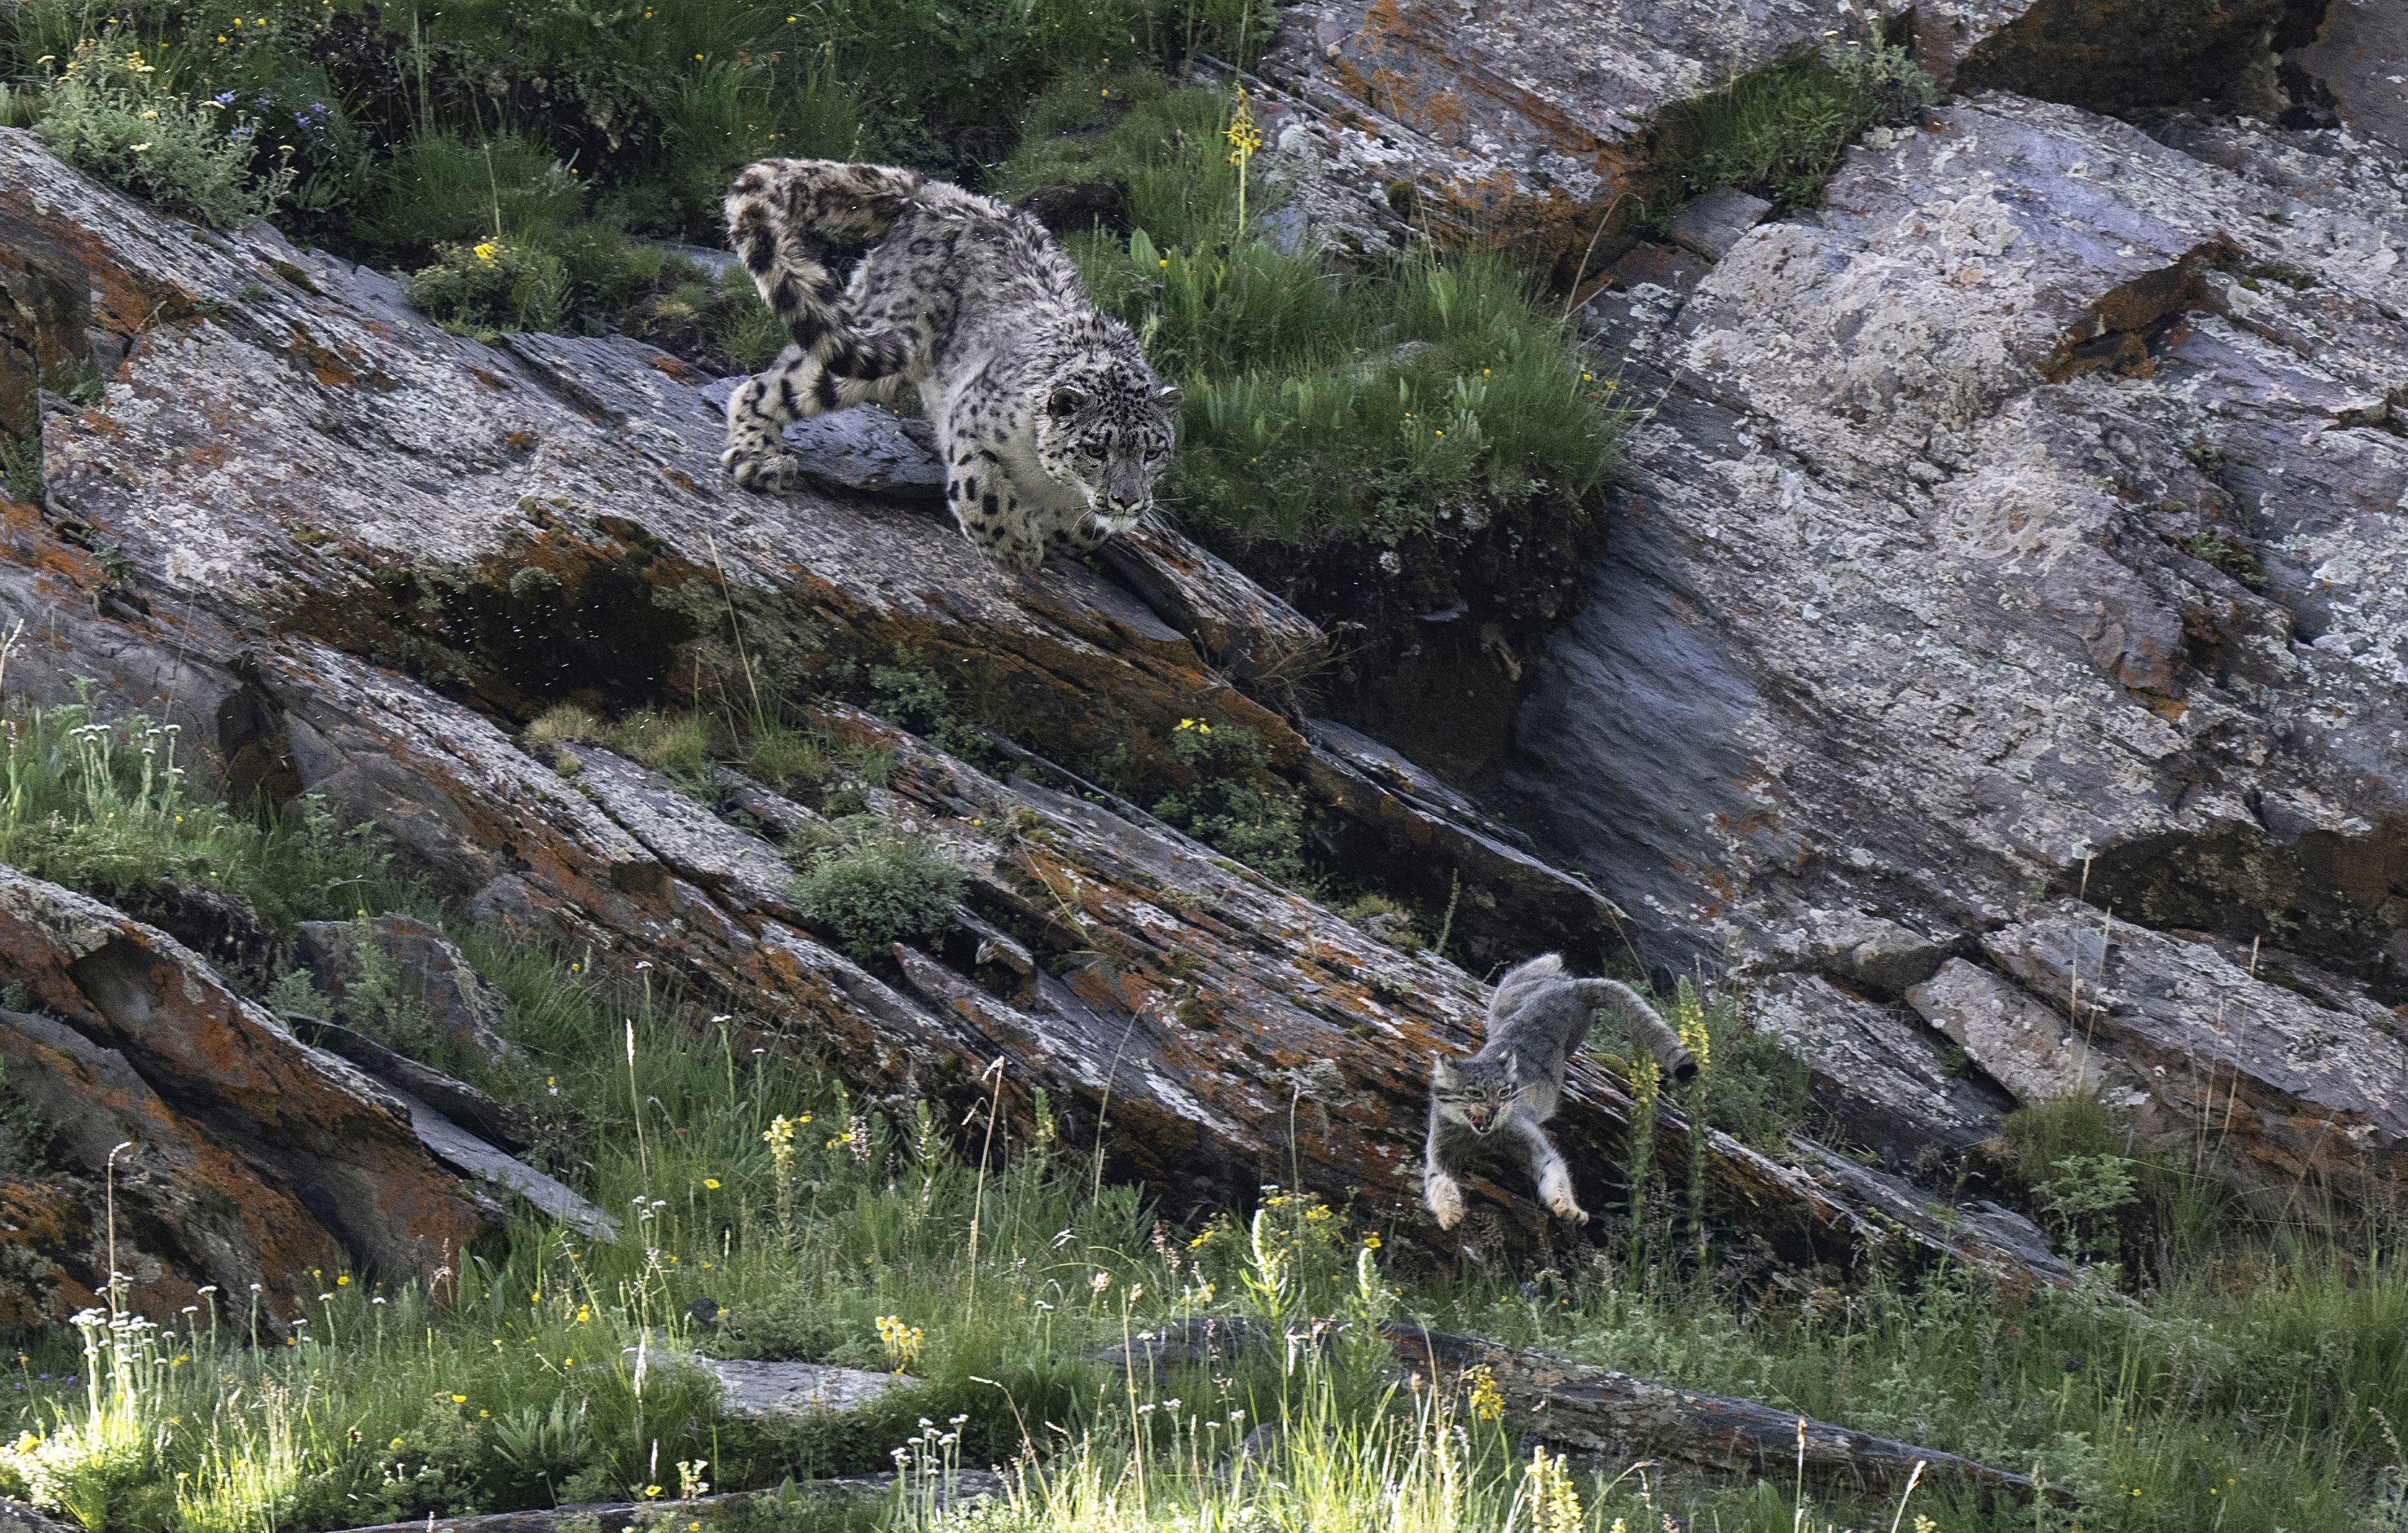 Snow leopard hunting Pallas's cat